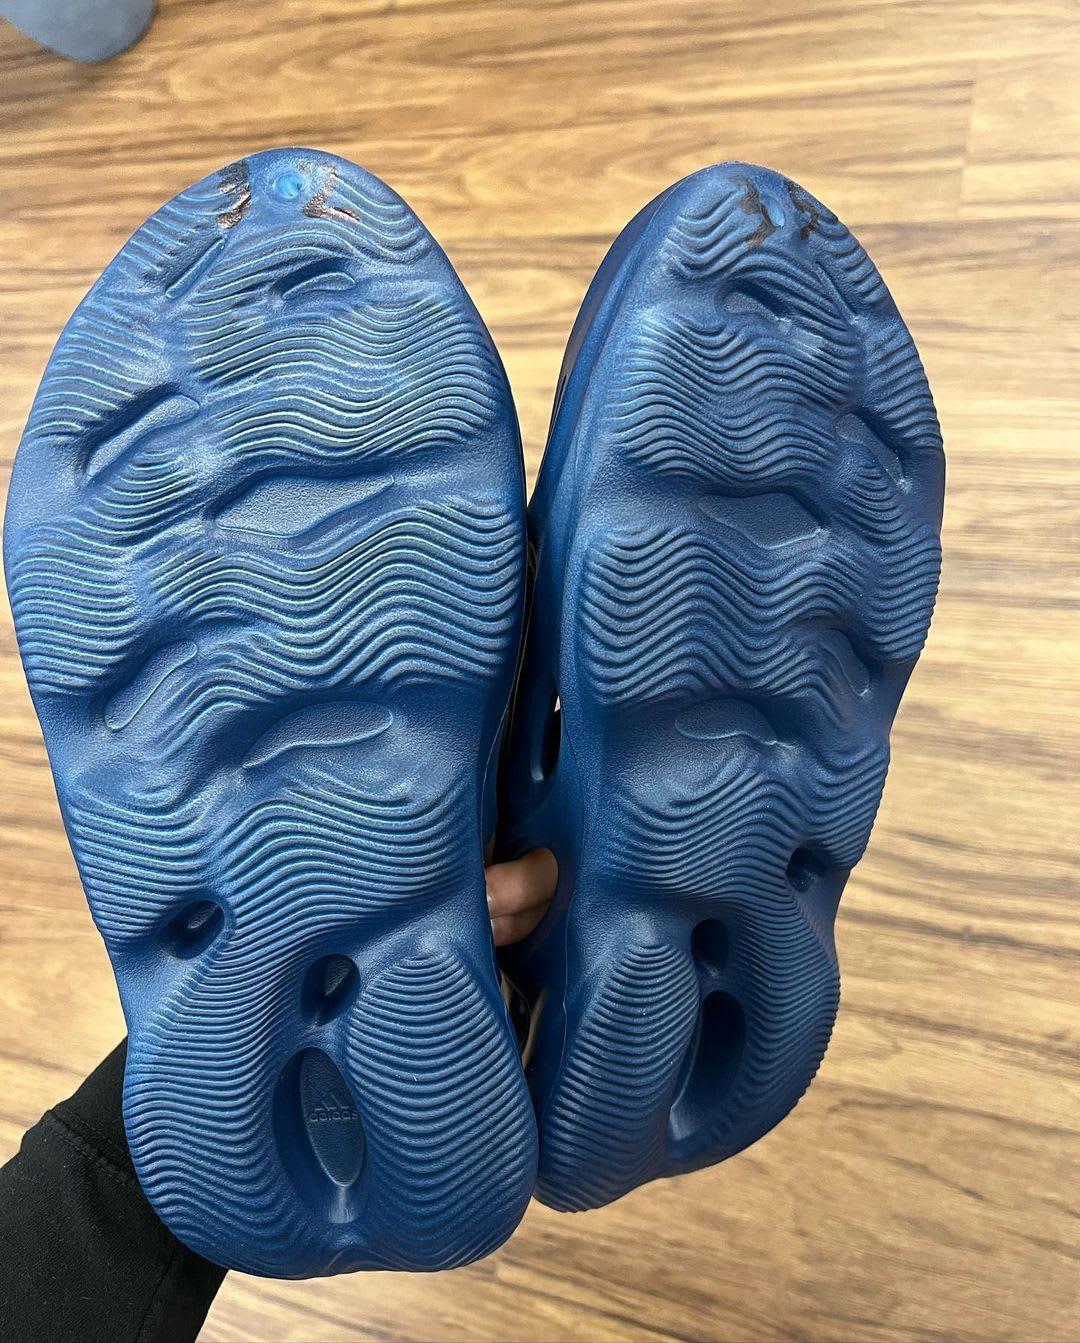 adidas Yeezy Foam Runner 'Navy'